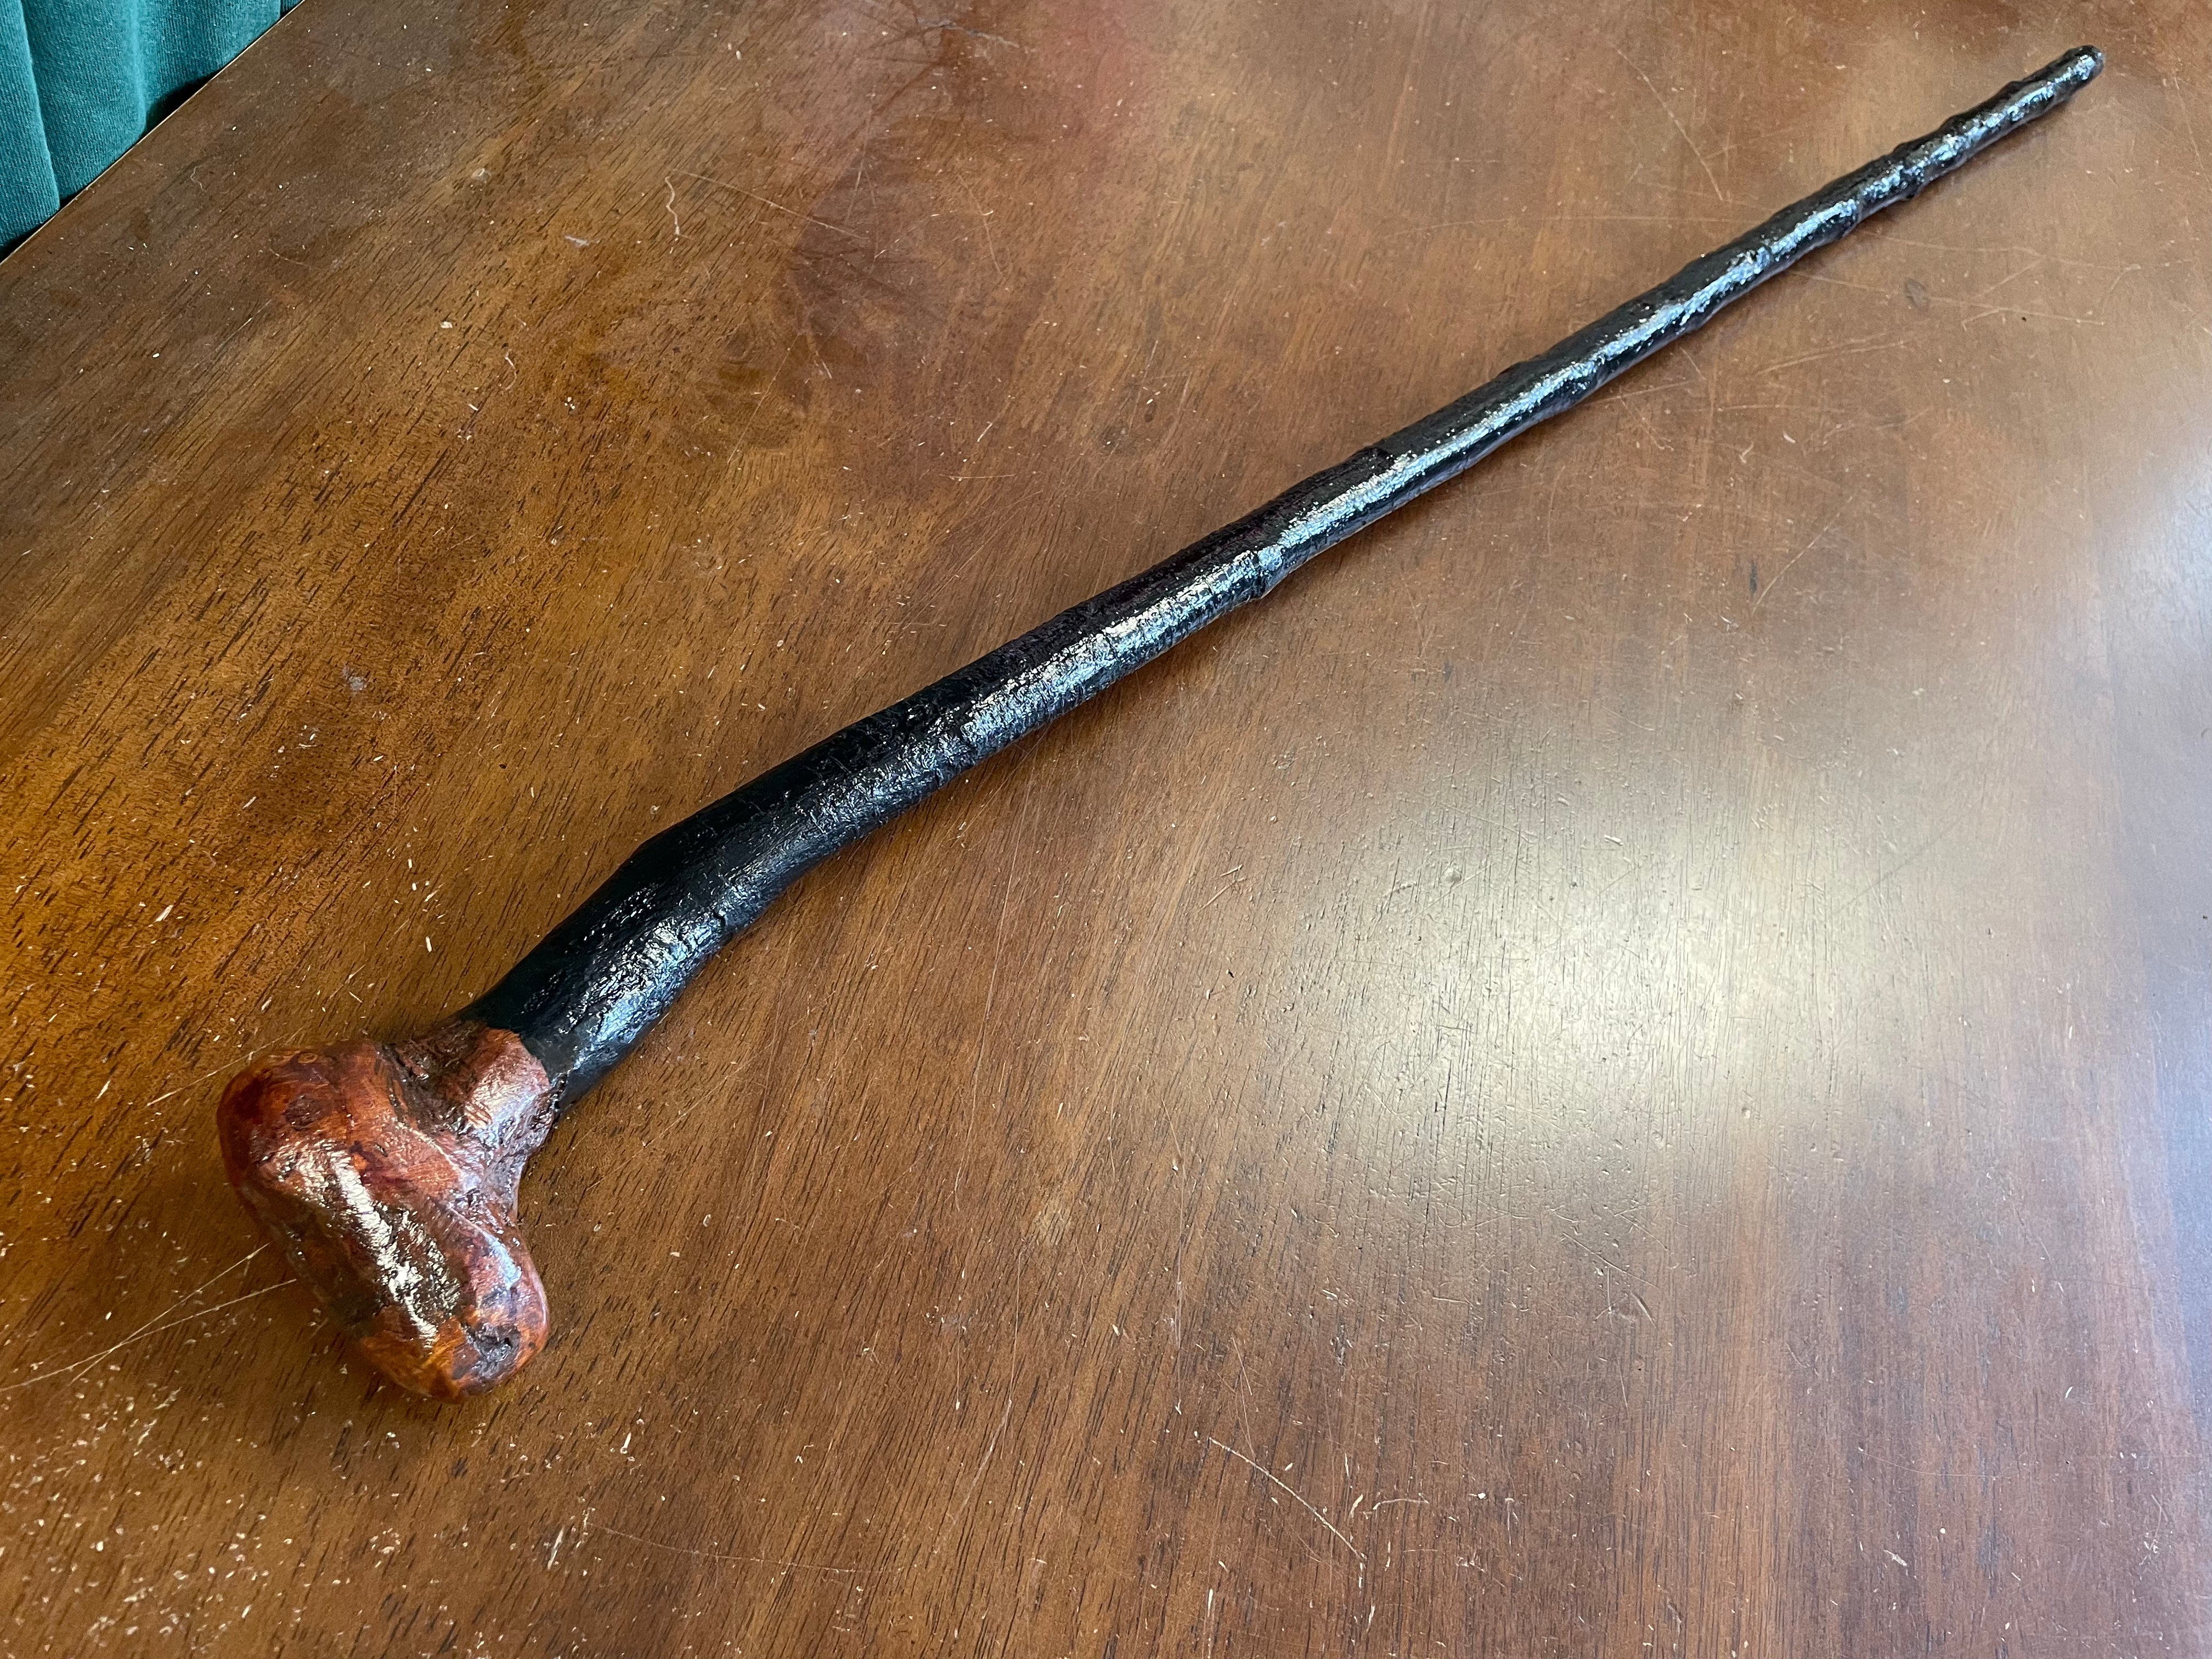 Blackthorn Walking Stick 35 3/4 inch- Handmade in Ireland